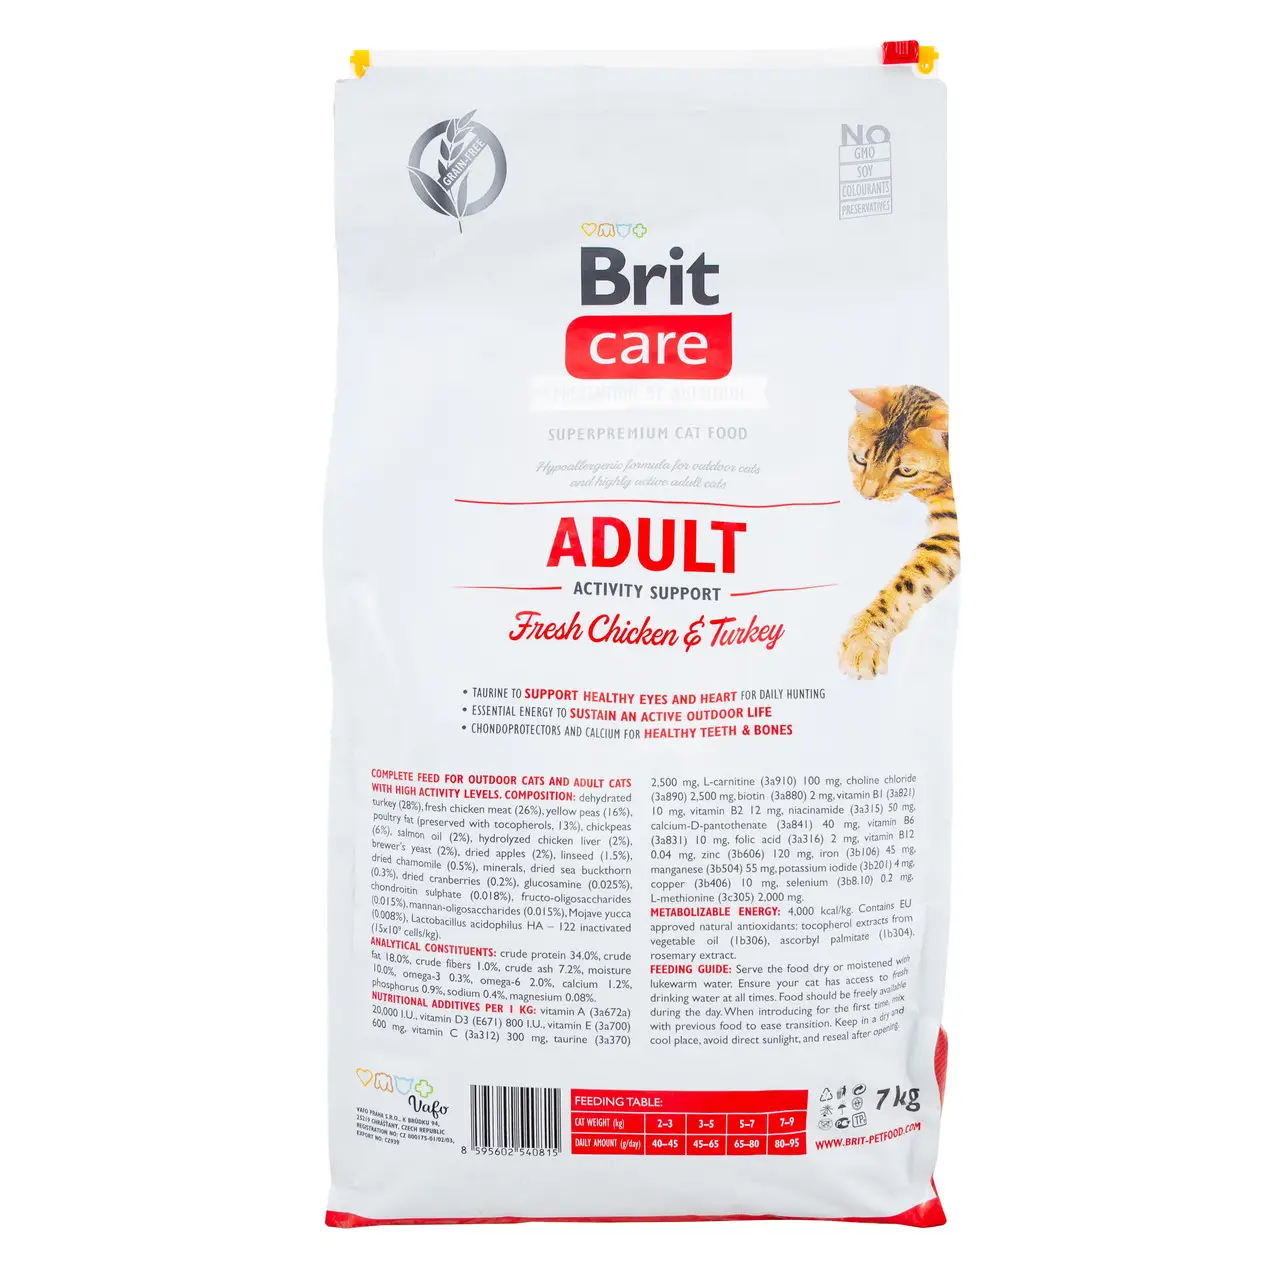 Brit Care Cat GF Adult Activity Support, 7кг (підтримка активності для дорослих котів)3